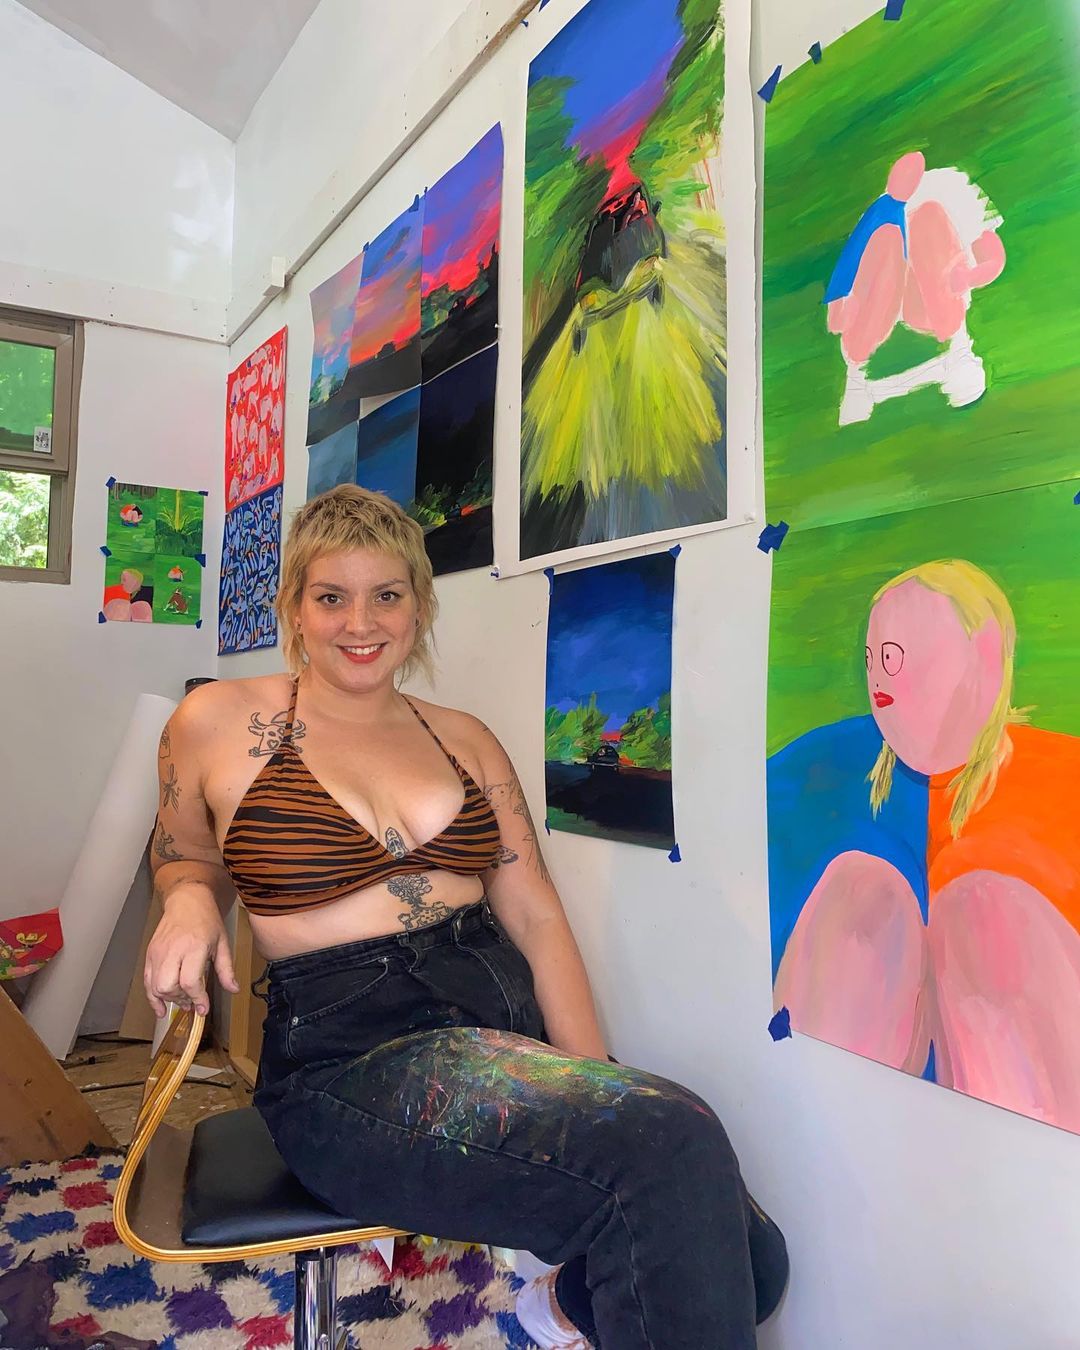 Tara Booth in their studio,  image source: artist’s Instagram